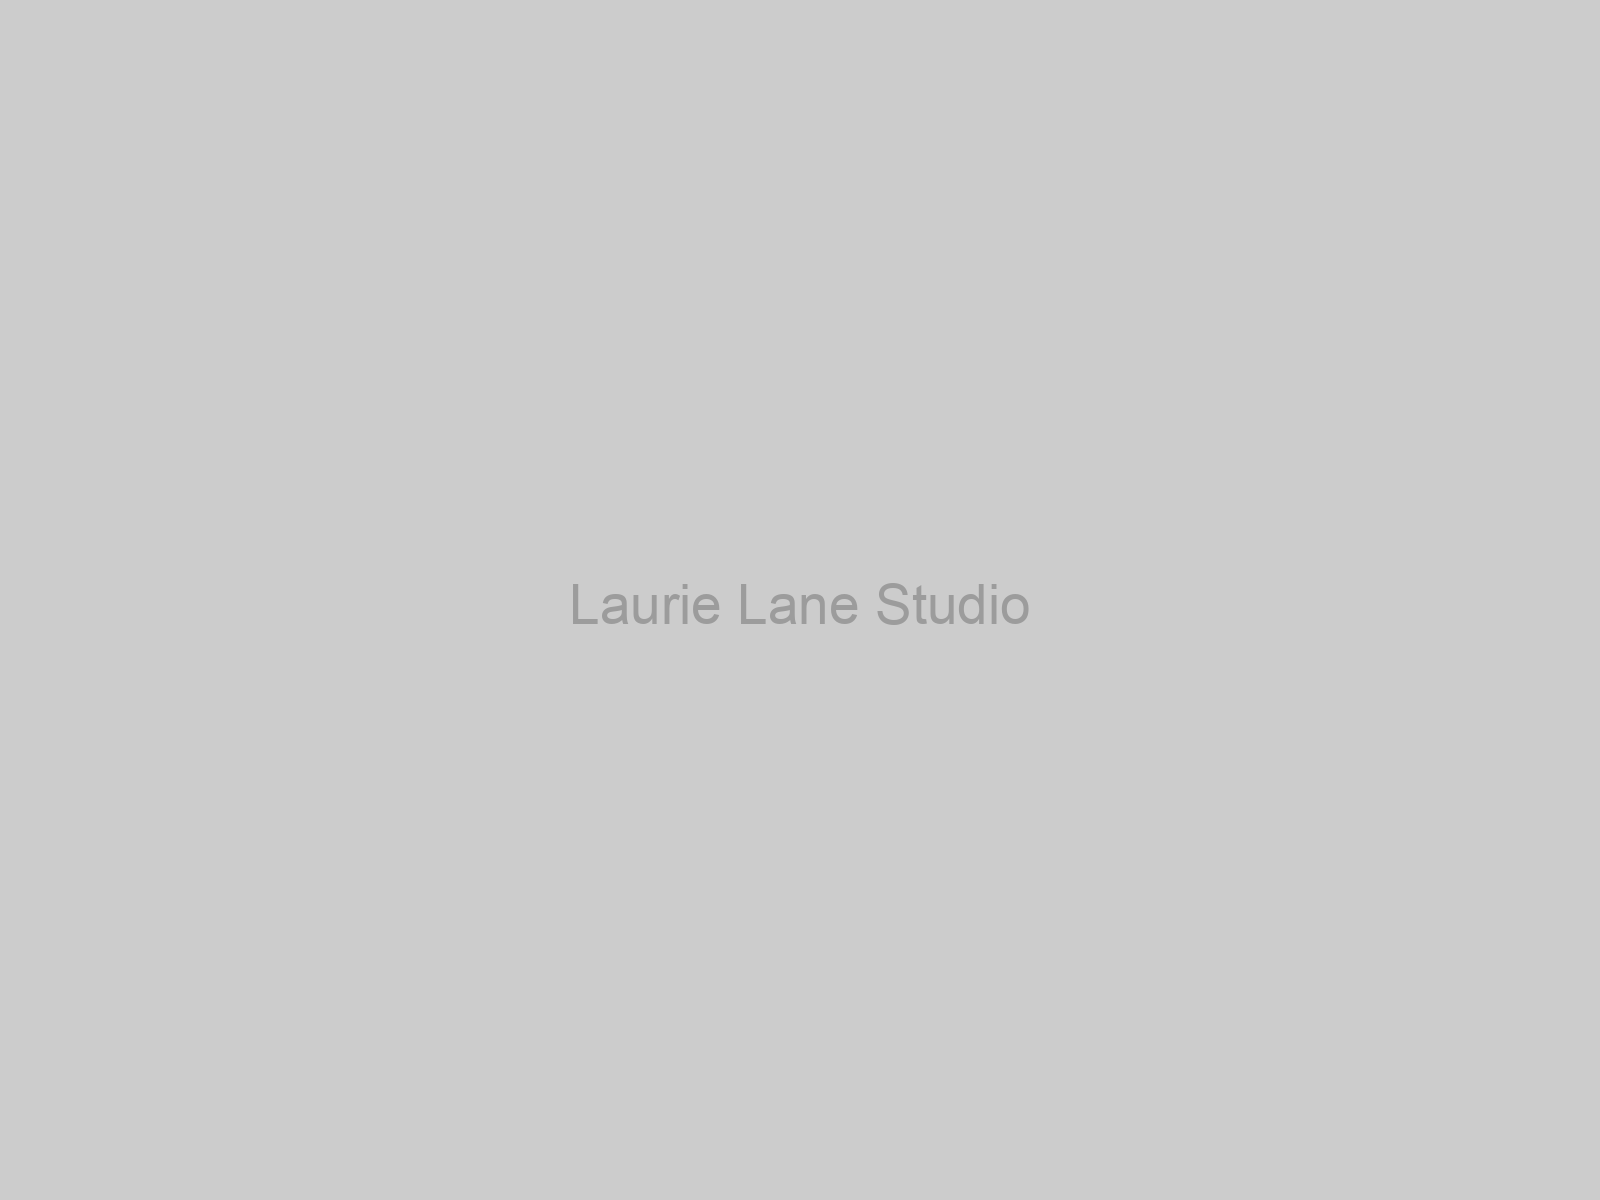 Laurie Lane Studio